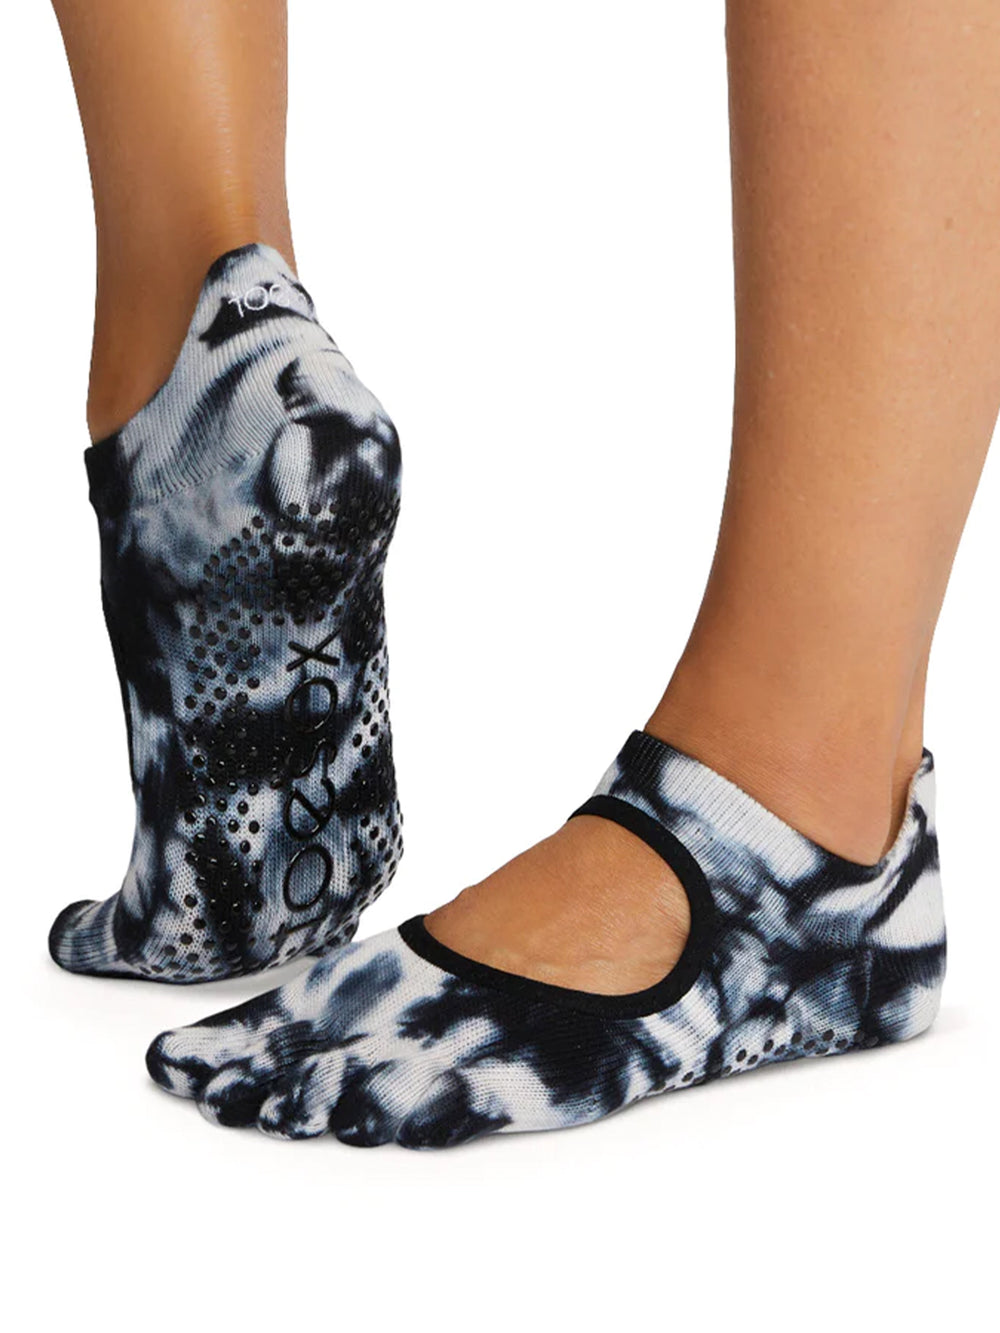 TOESOX] Bellarina (Full-Toe) Grip Socks / Yoga Non-Slip Socks 23SS